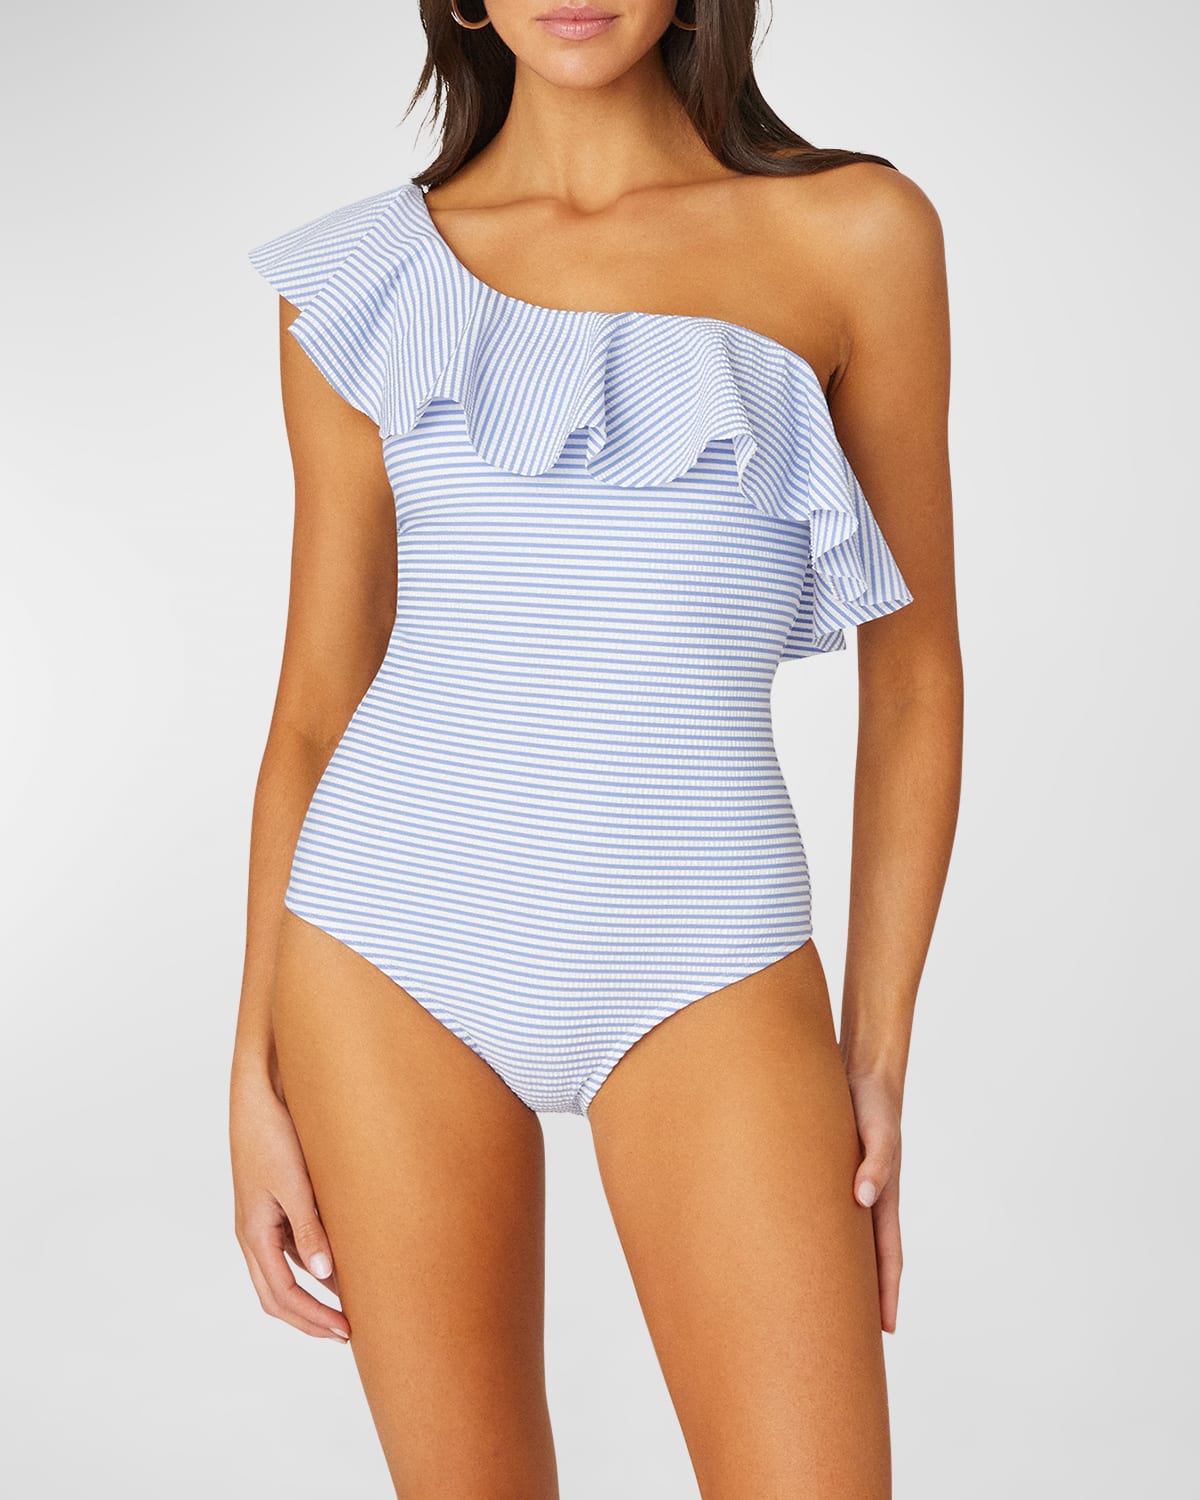 Stripe Ruffled One-Piece Swimsuit